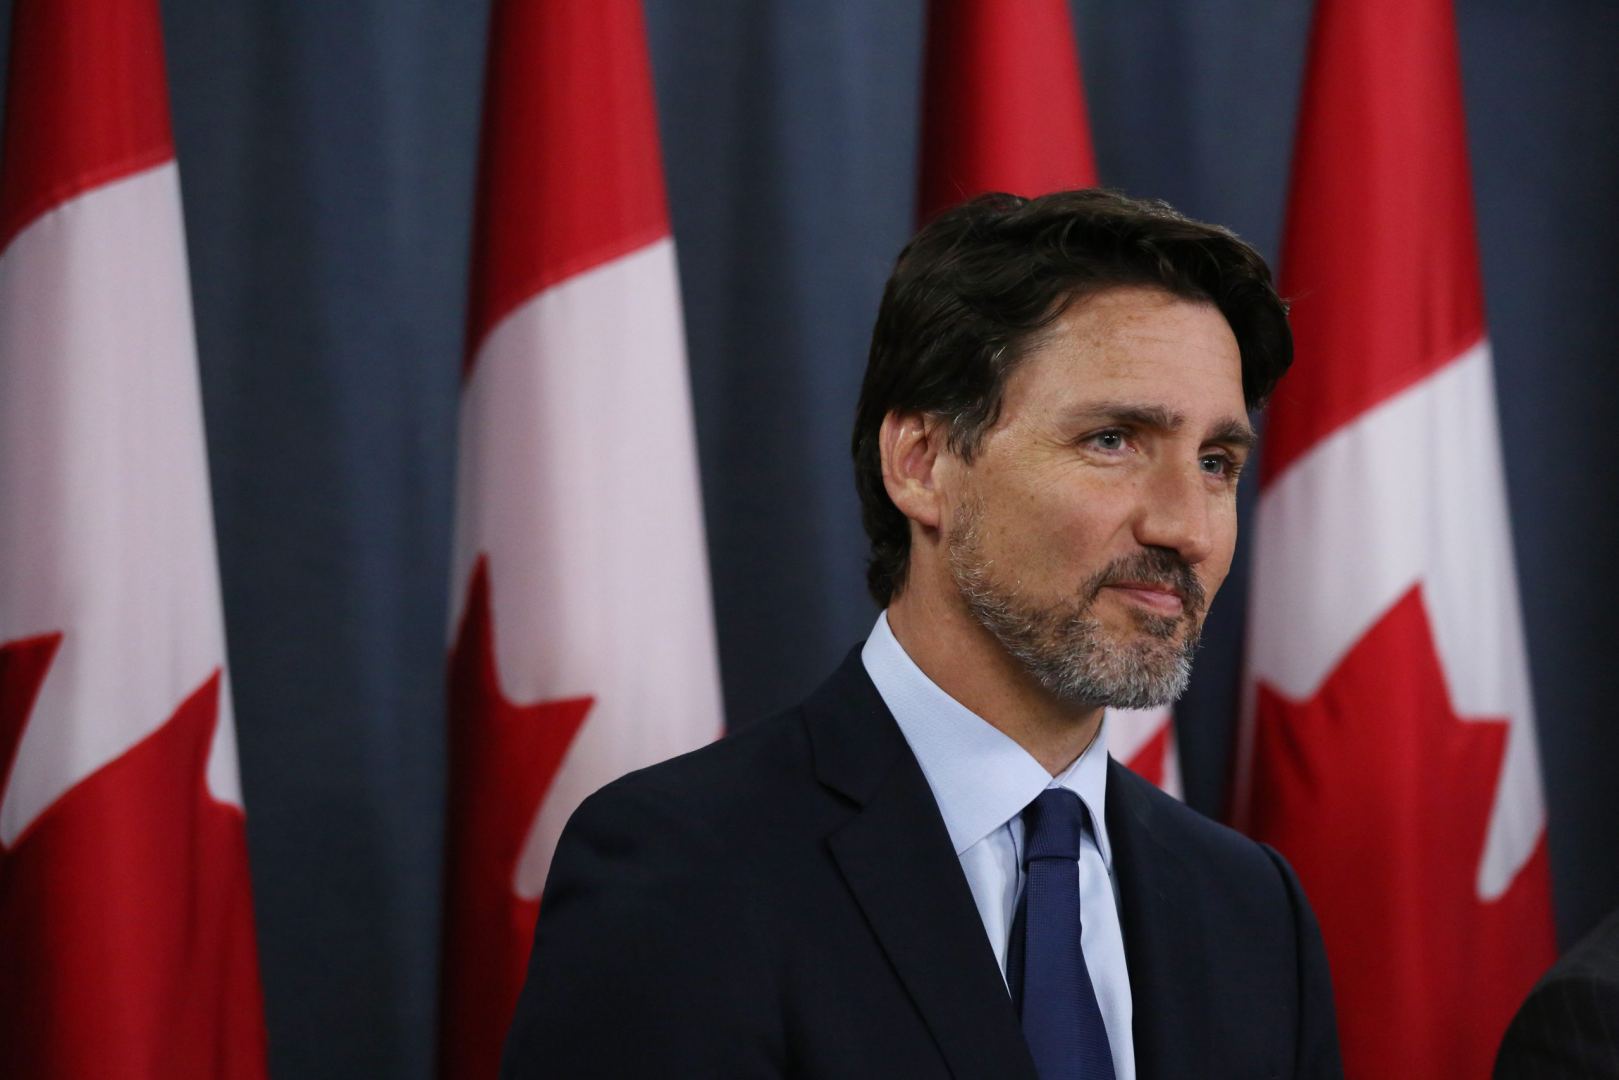 Canada to spend C$19 billion on 'safe restart' after lockdown, Trudeau says